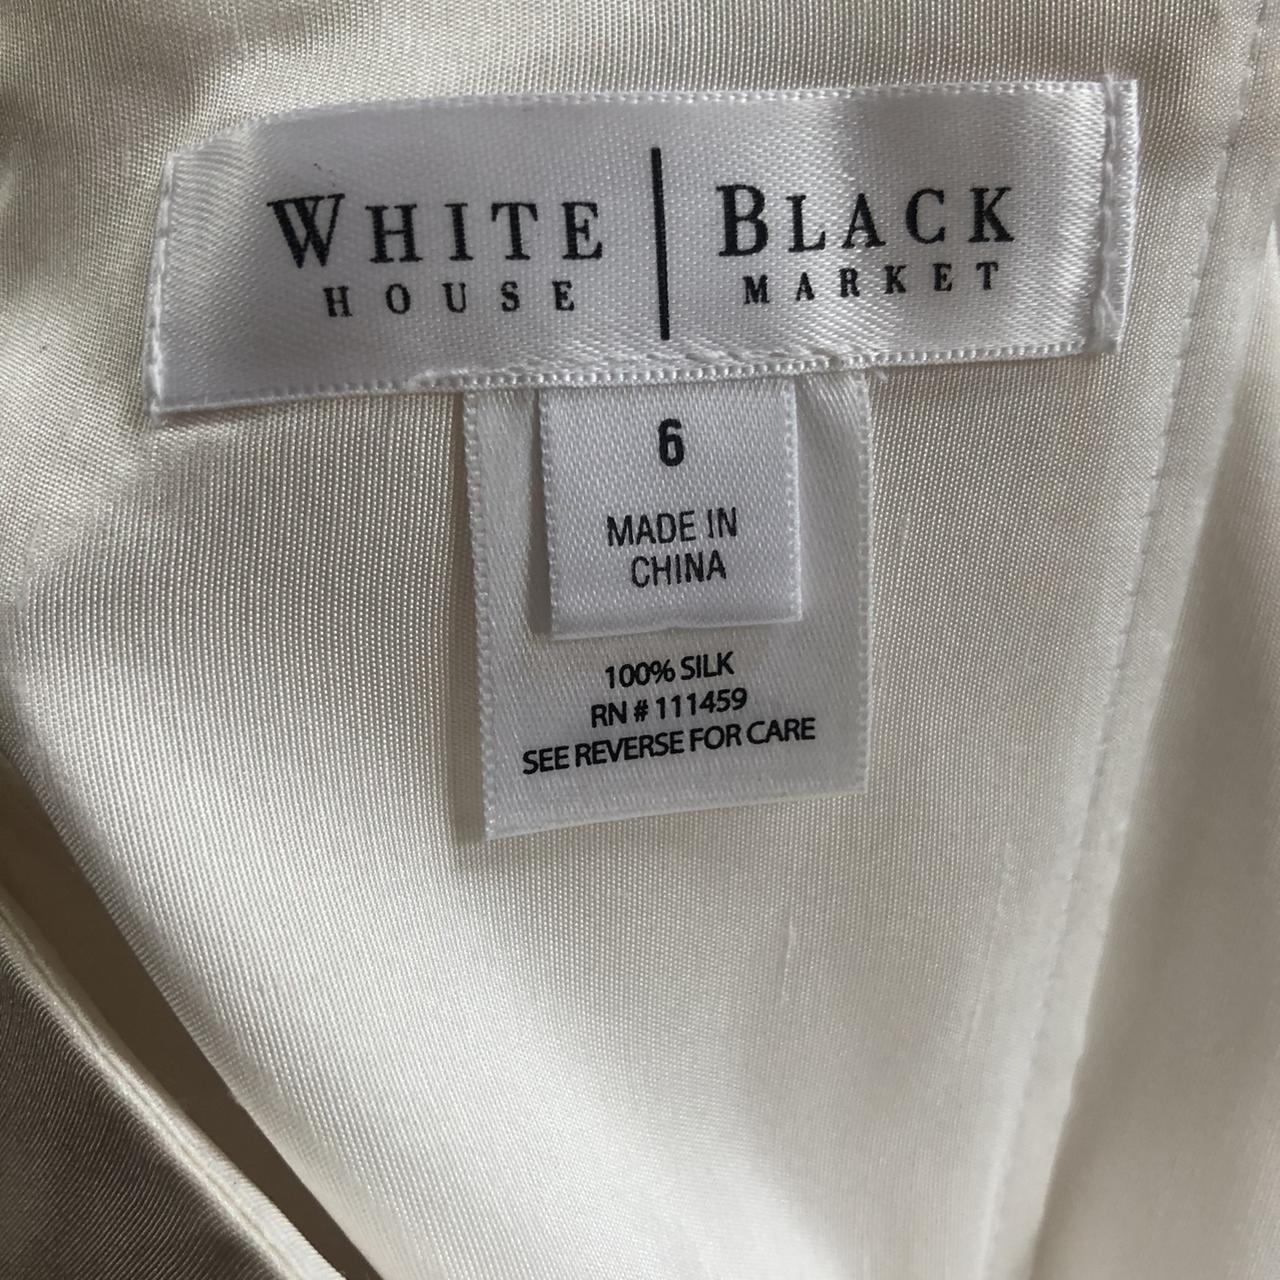 White House Black Market Women's White and Black Corset (4)